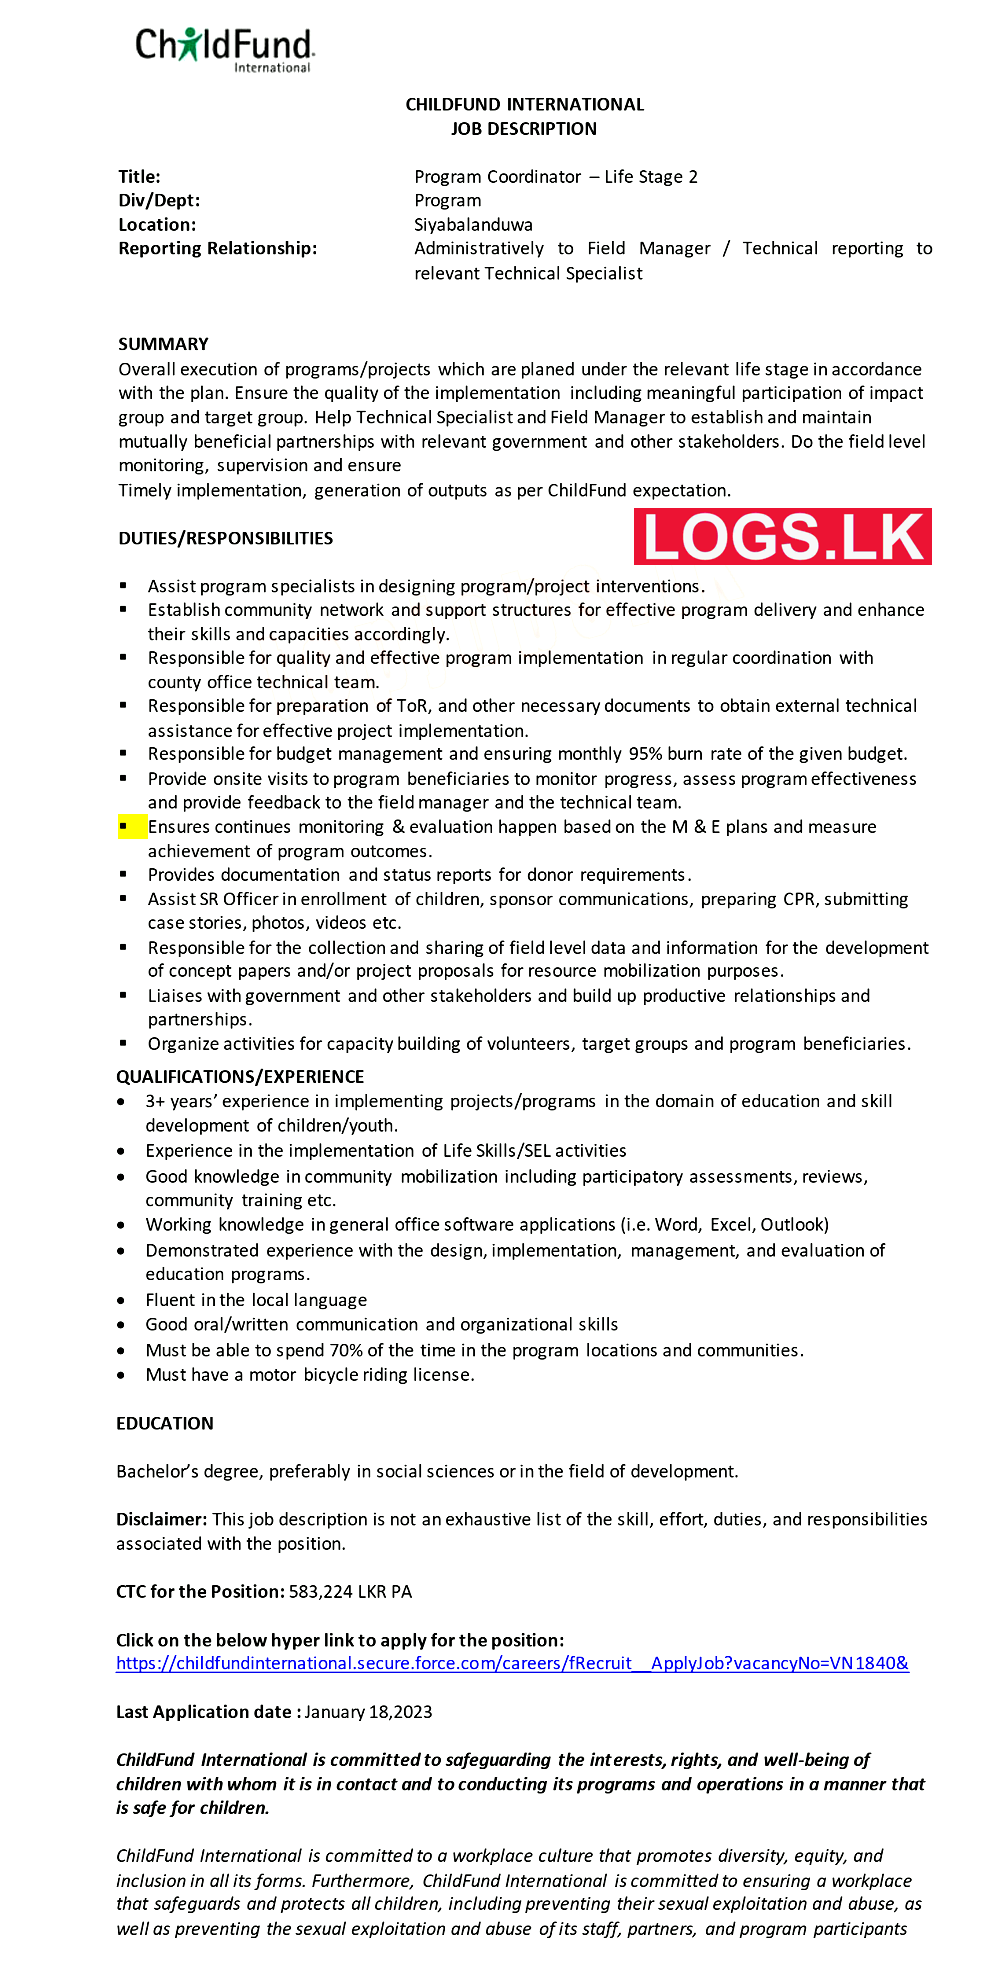 Program Coordinator - ChildFund Sri Lanka Vacancies 2023 Application Form, Details Download